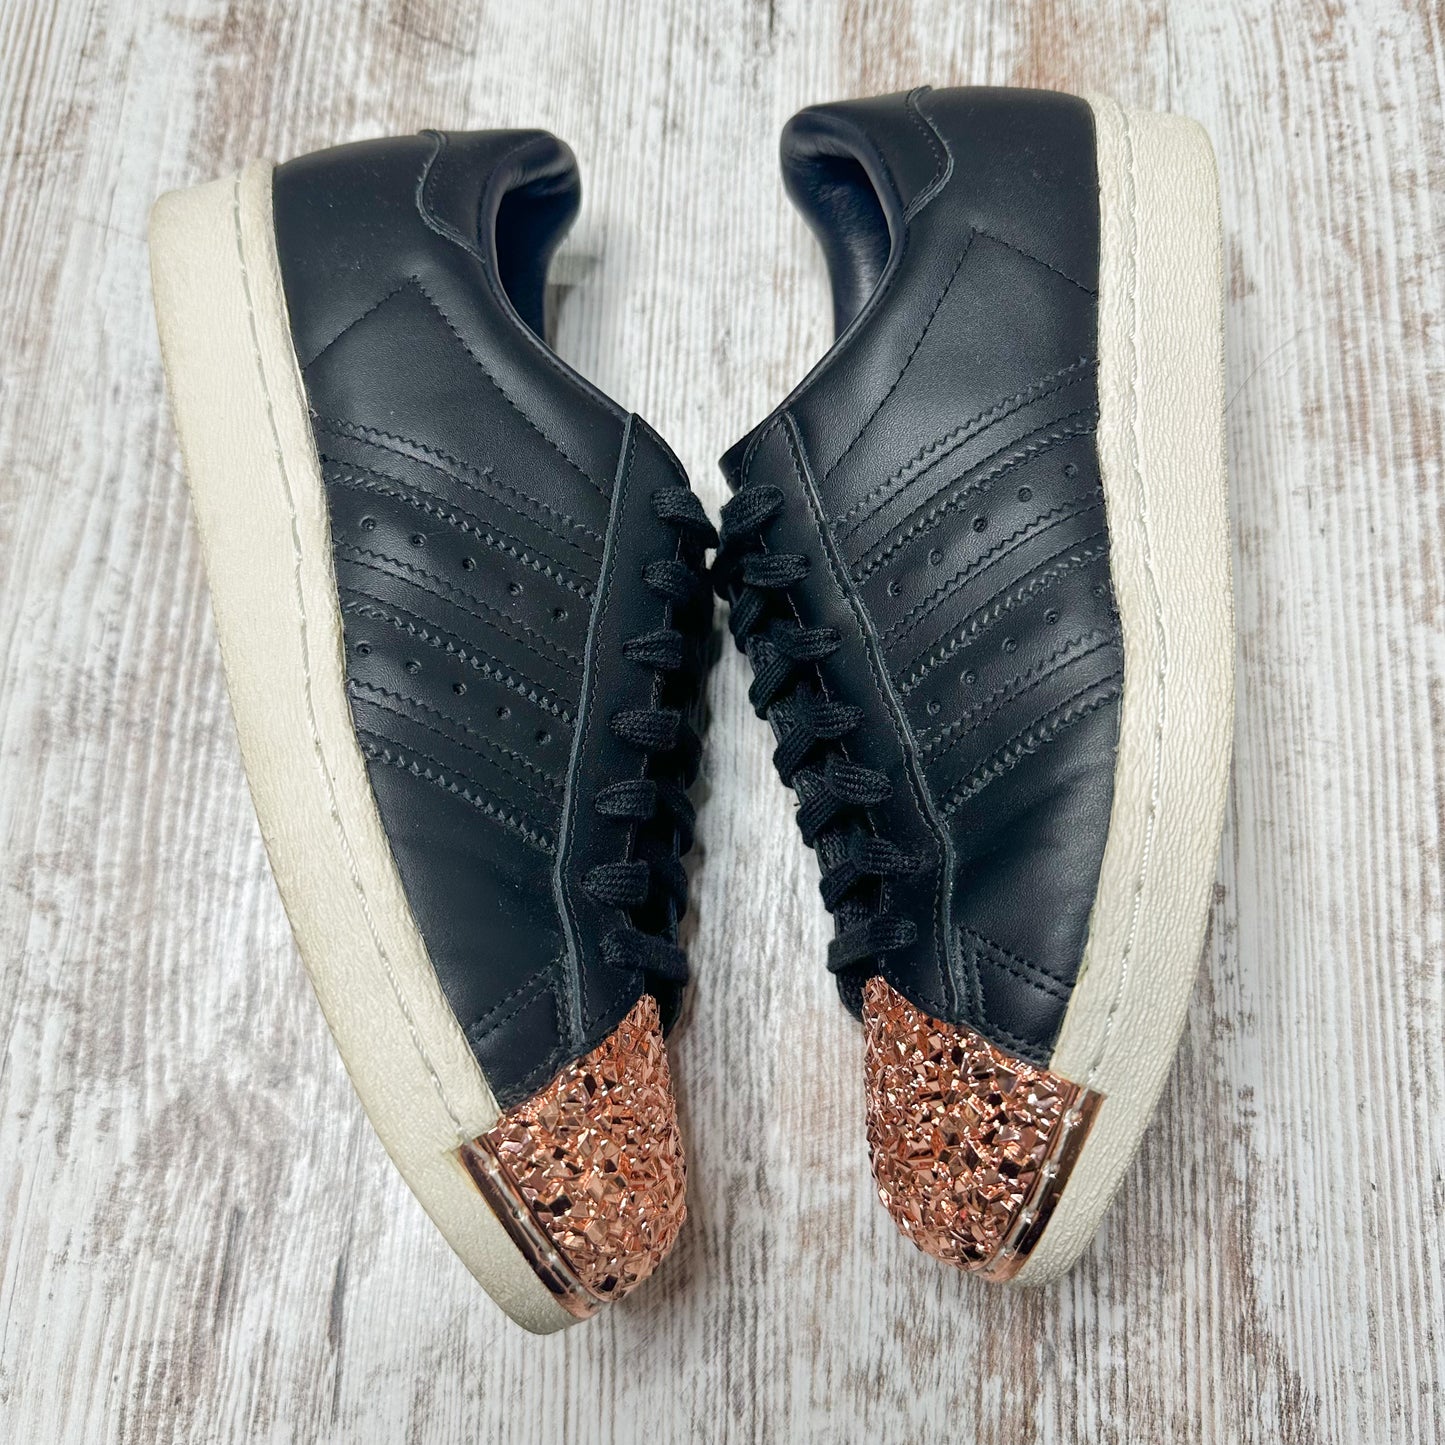 Adidas Originals Superstar 80s Rose Gold Metal Toe Sneakers Size 7